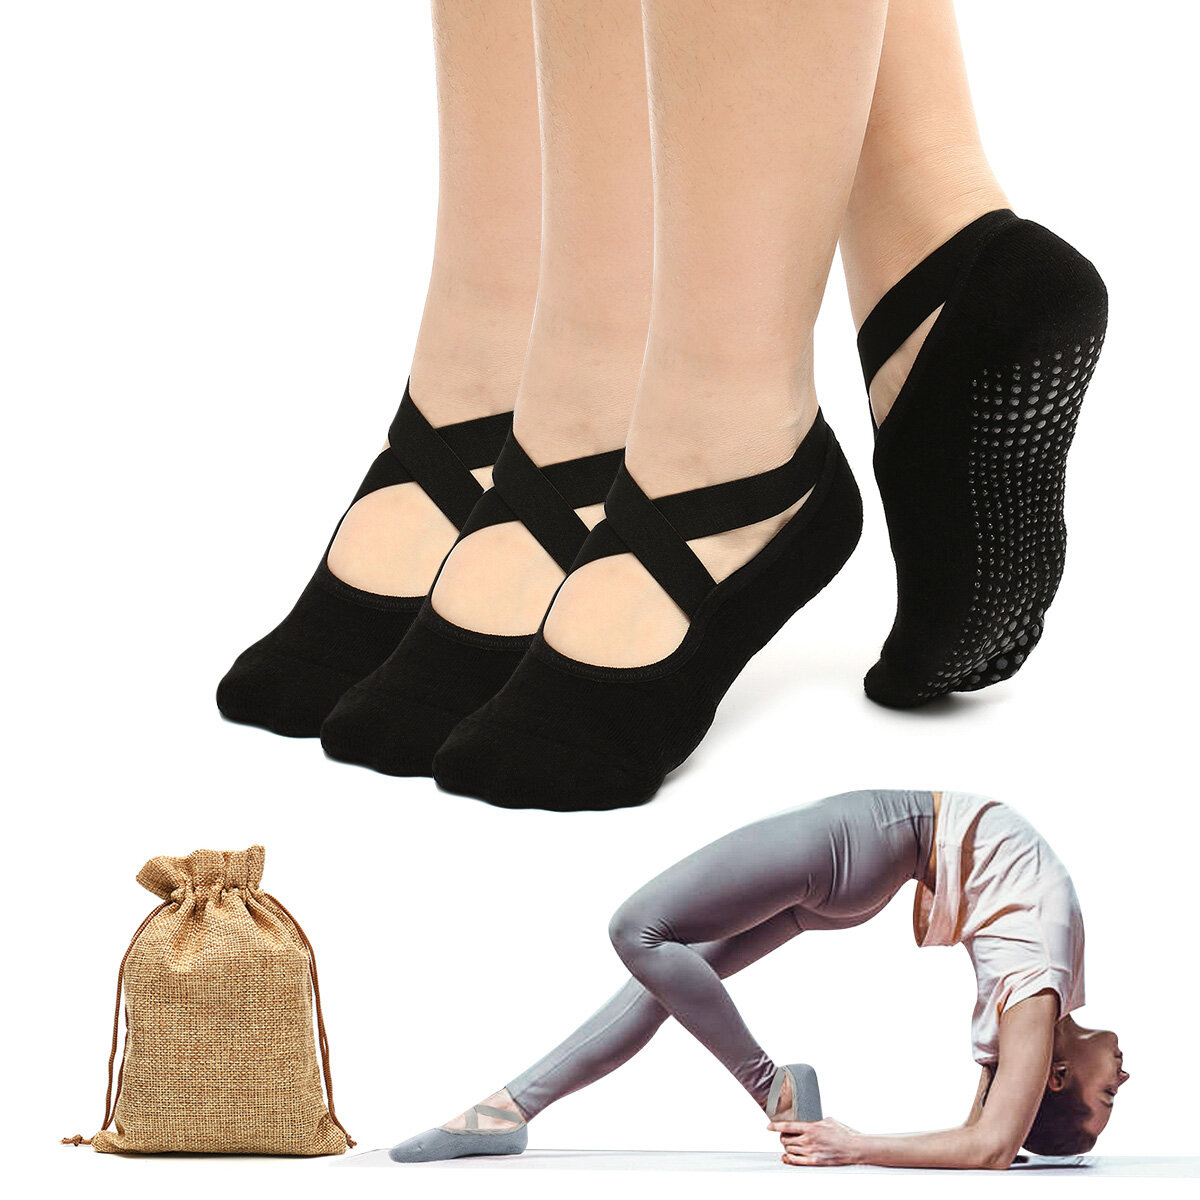 

CHARMINER 2PCS/3PCS Cross-strap Yoga Socks Non-slip and Breathable Подходит для Ballet Pilates Yoga for Female